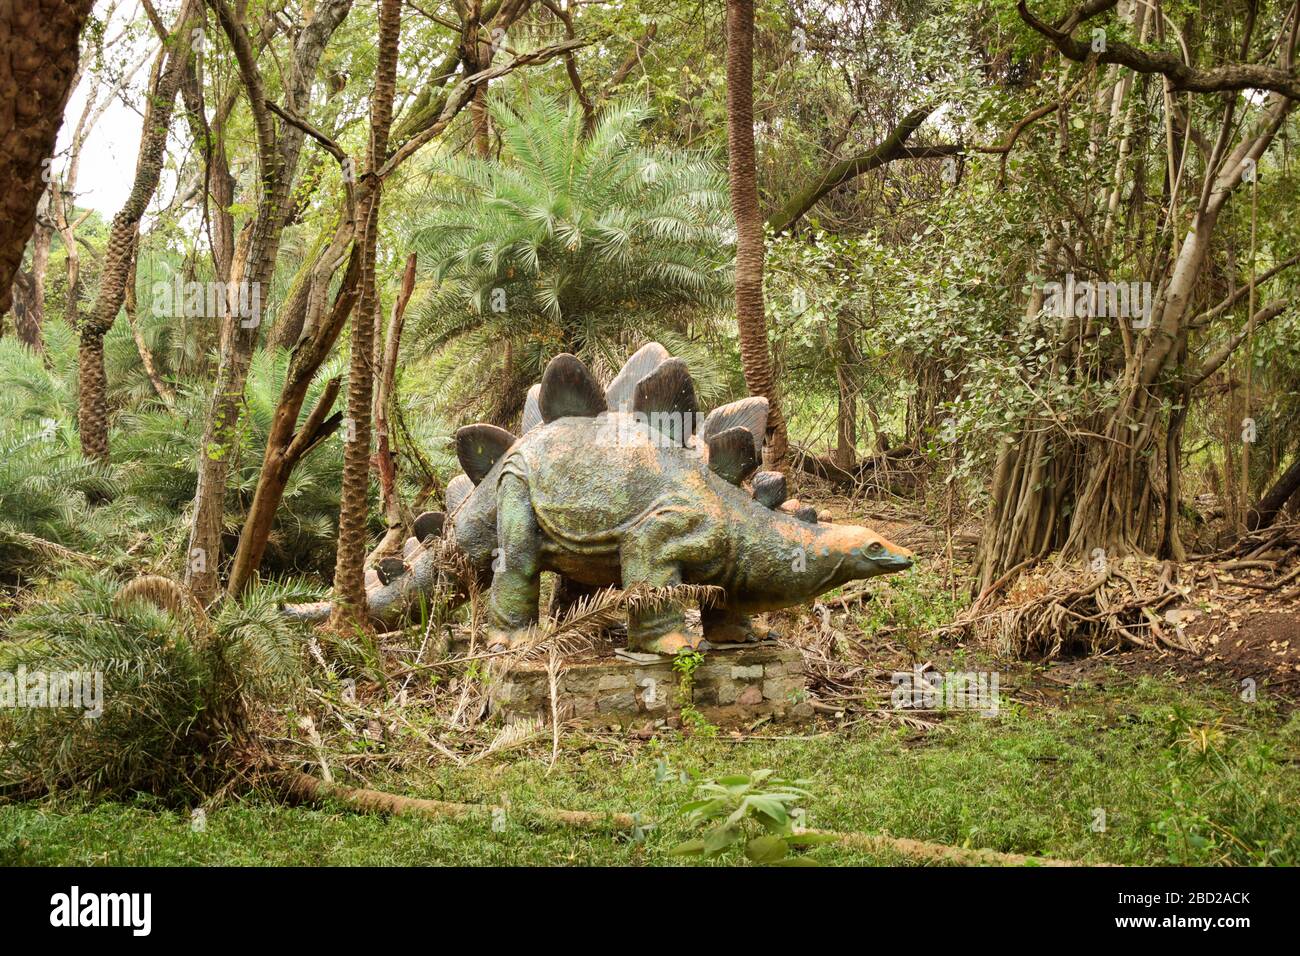 Wild Animal Dinosaur Statues in Zoo Park Stock Photograph Image Stock Photo